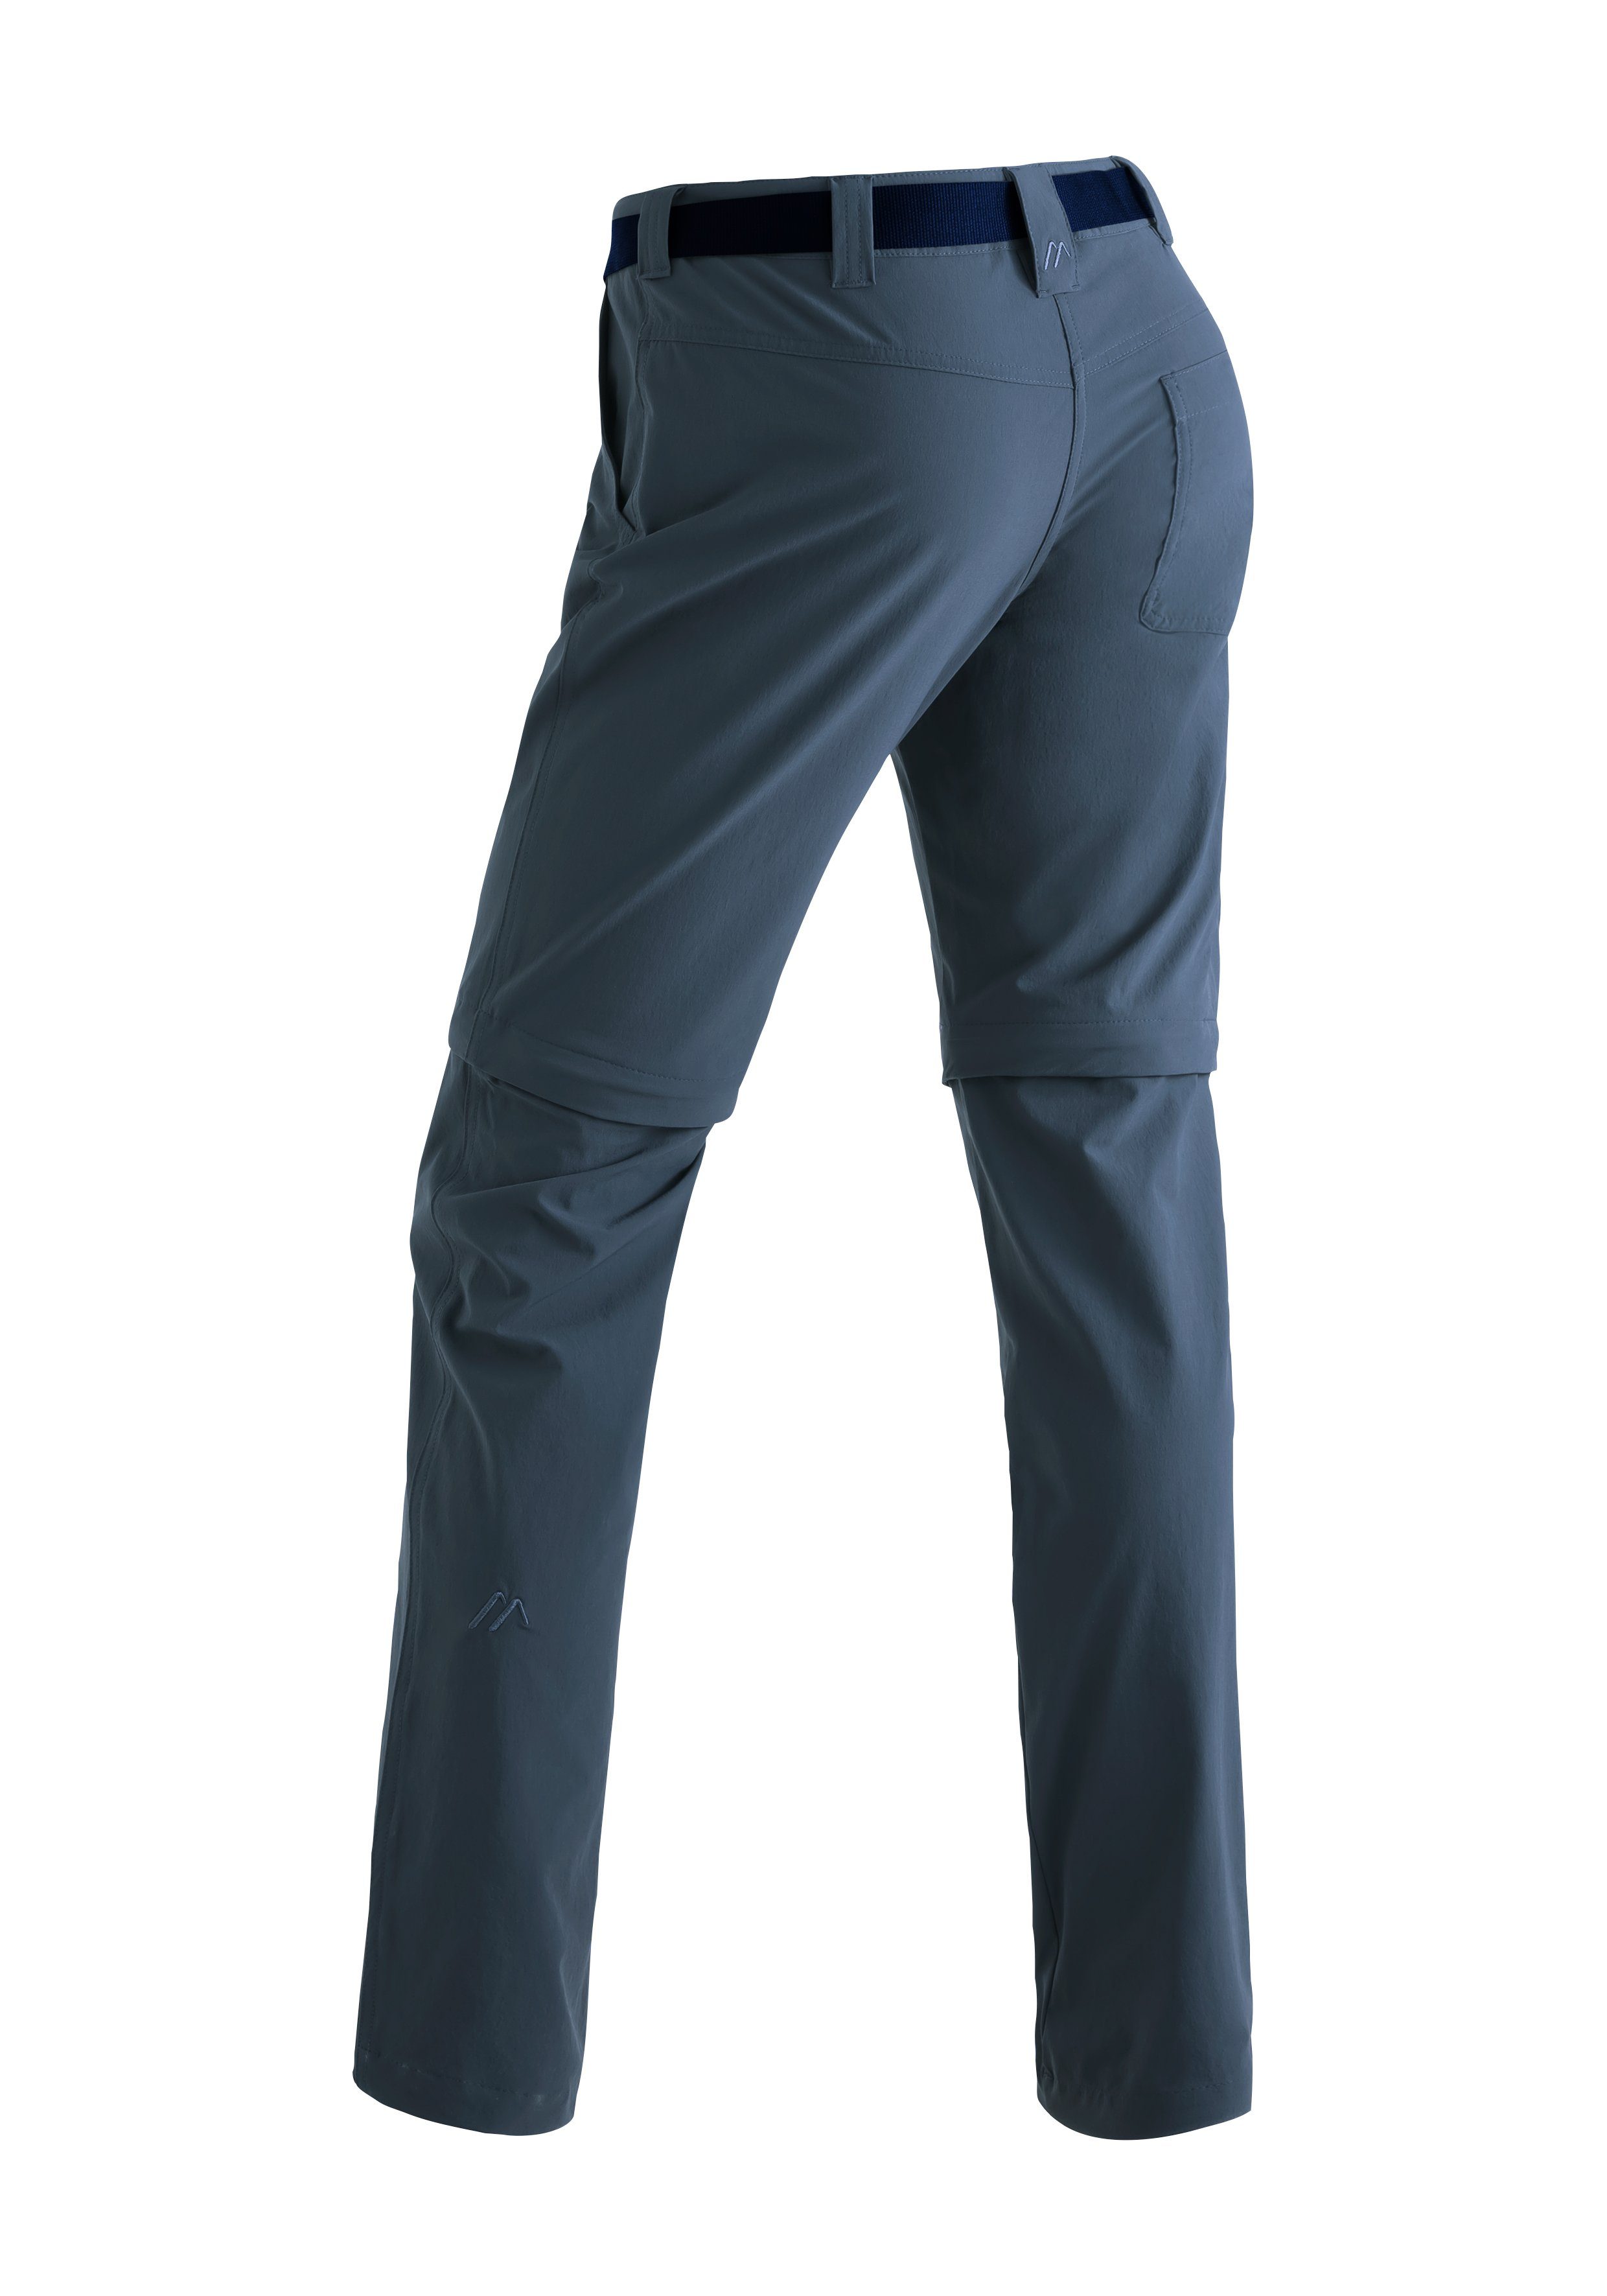 zip Maier Outdoor-Hose slim zipp-off Inara Damen Wanderhose, jeansblau Funktionshose Sports atmungsaktive